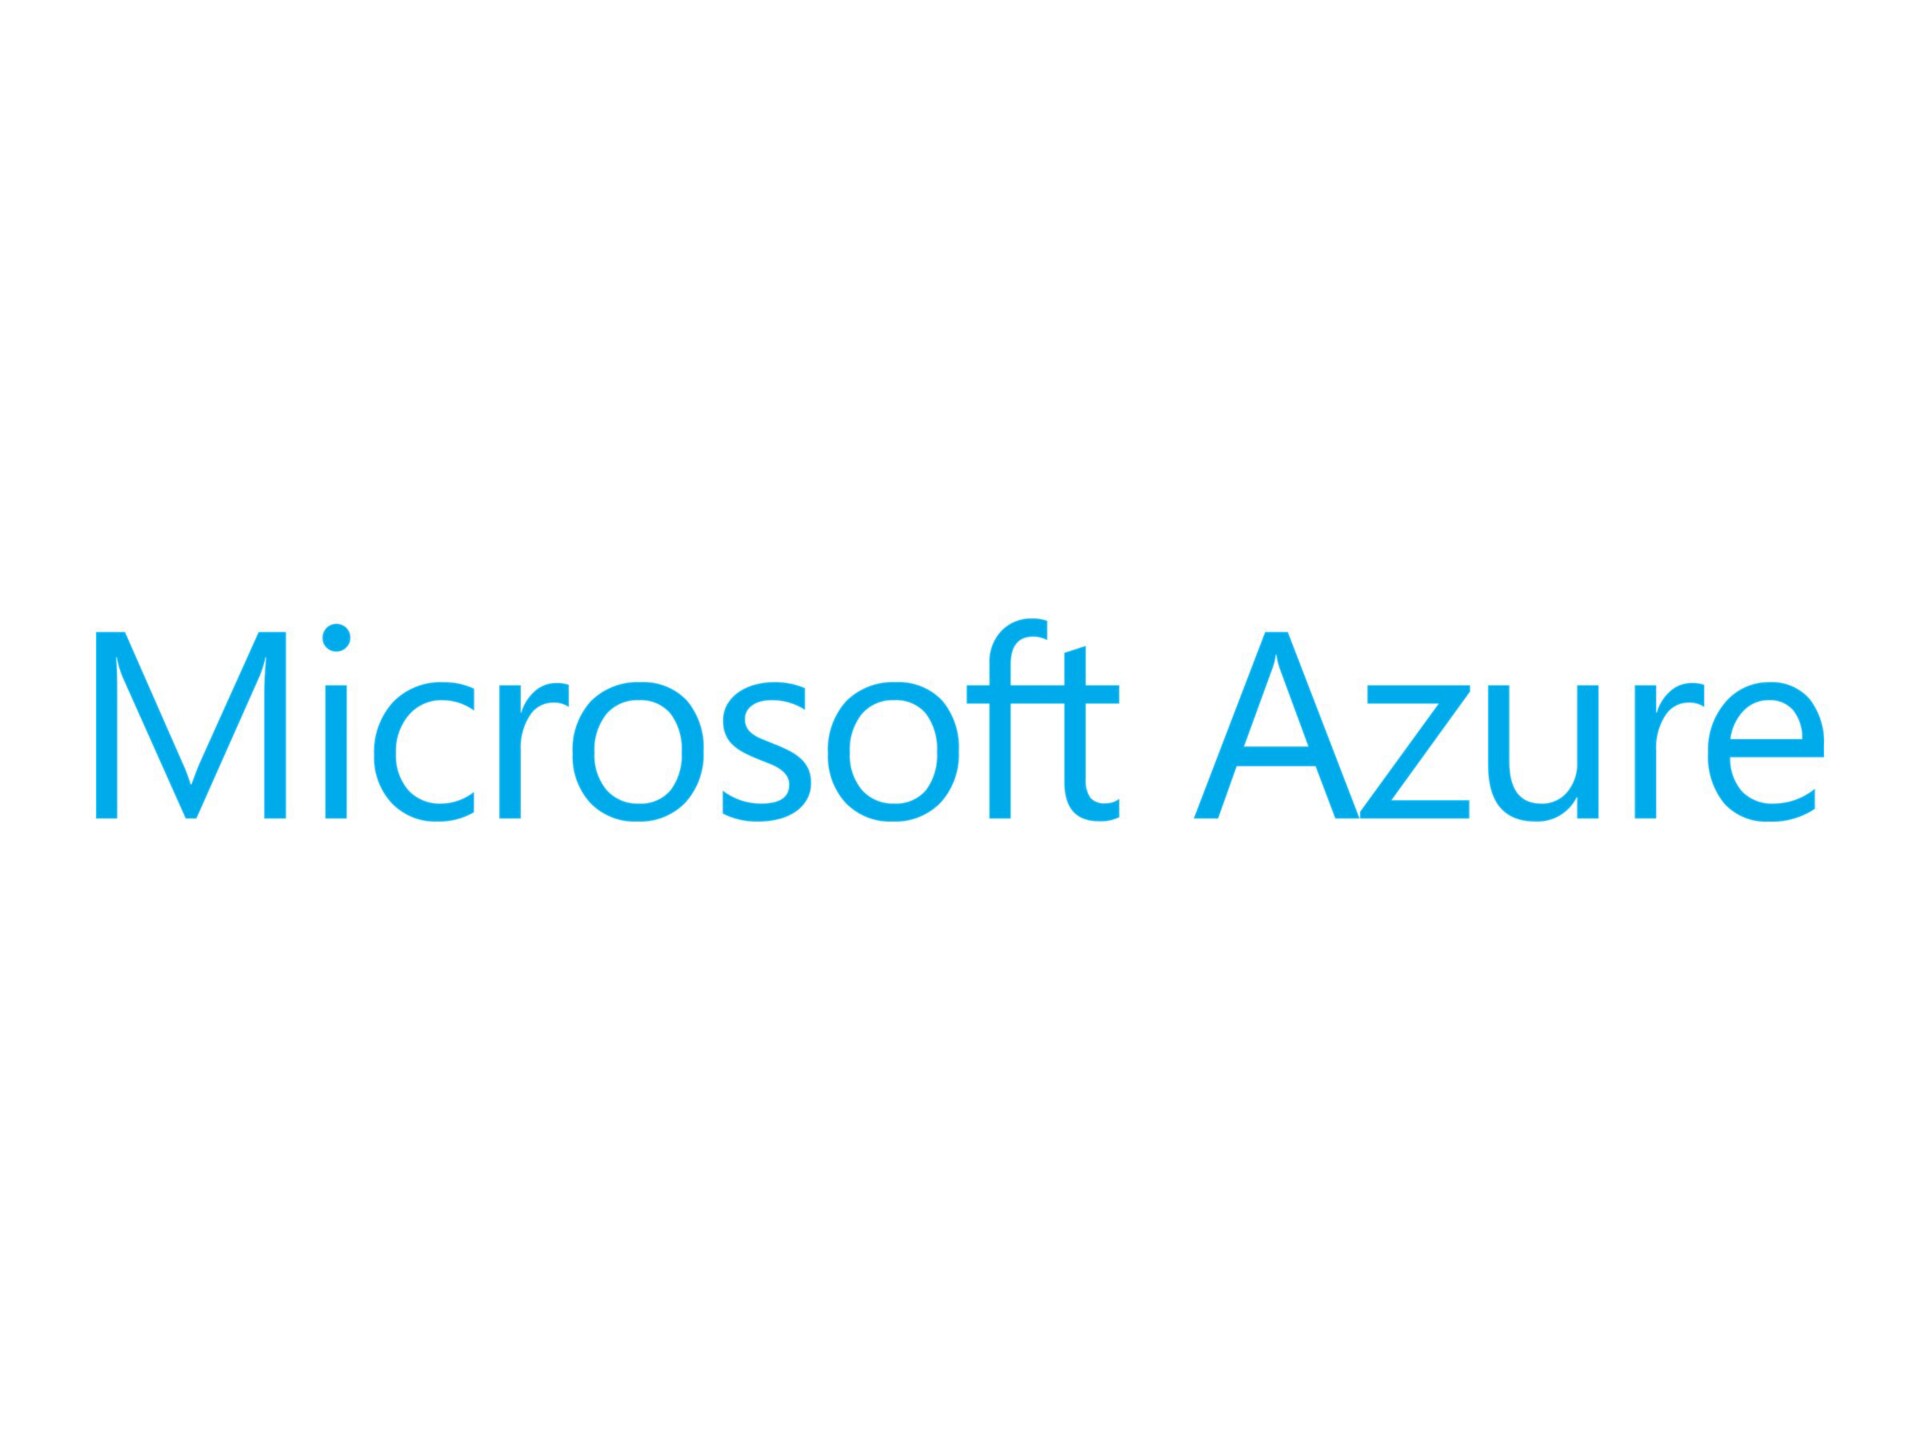 Microsoft Azure IoT Hub - Basic - B1 - fee - 1 unit per day